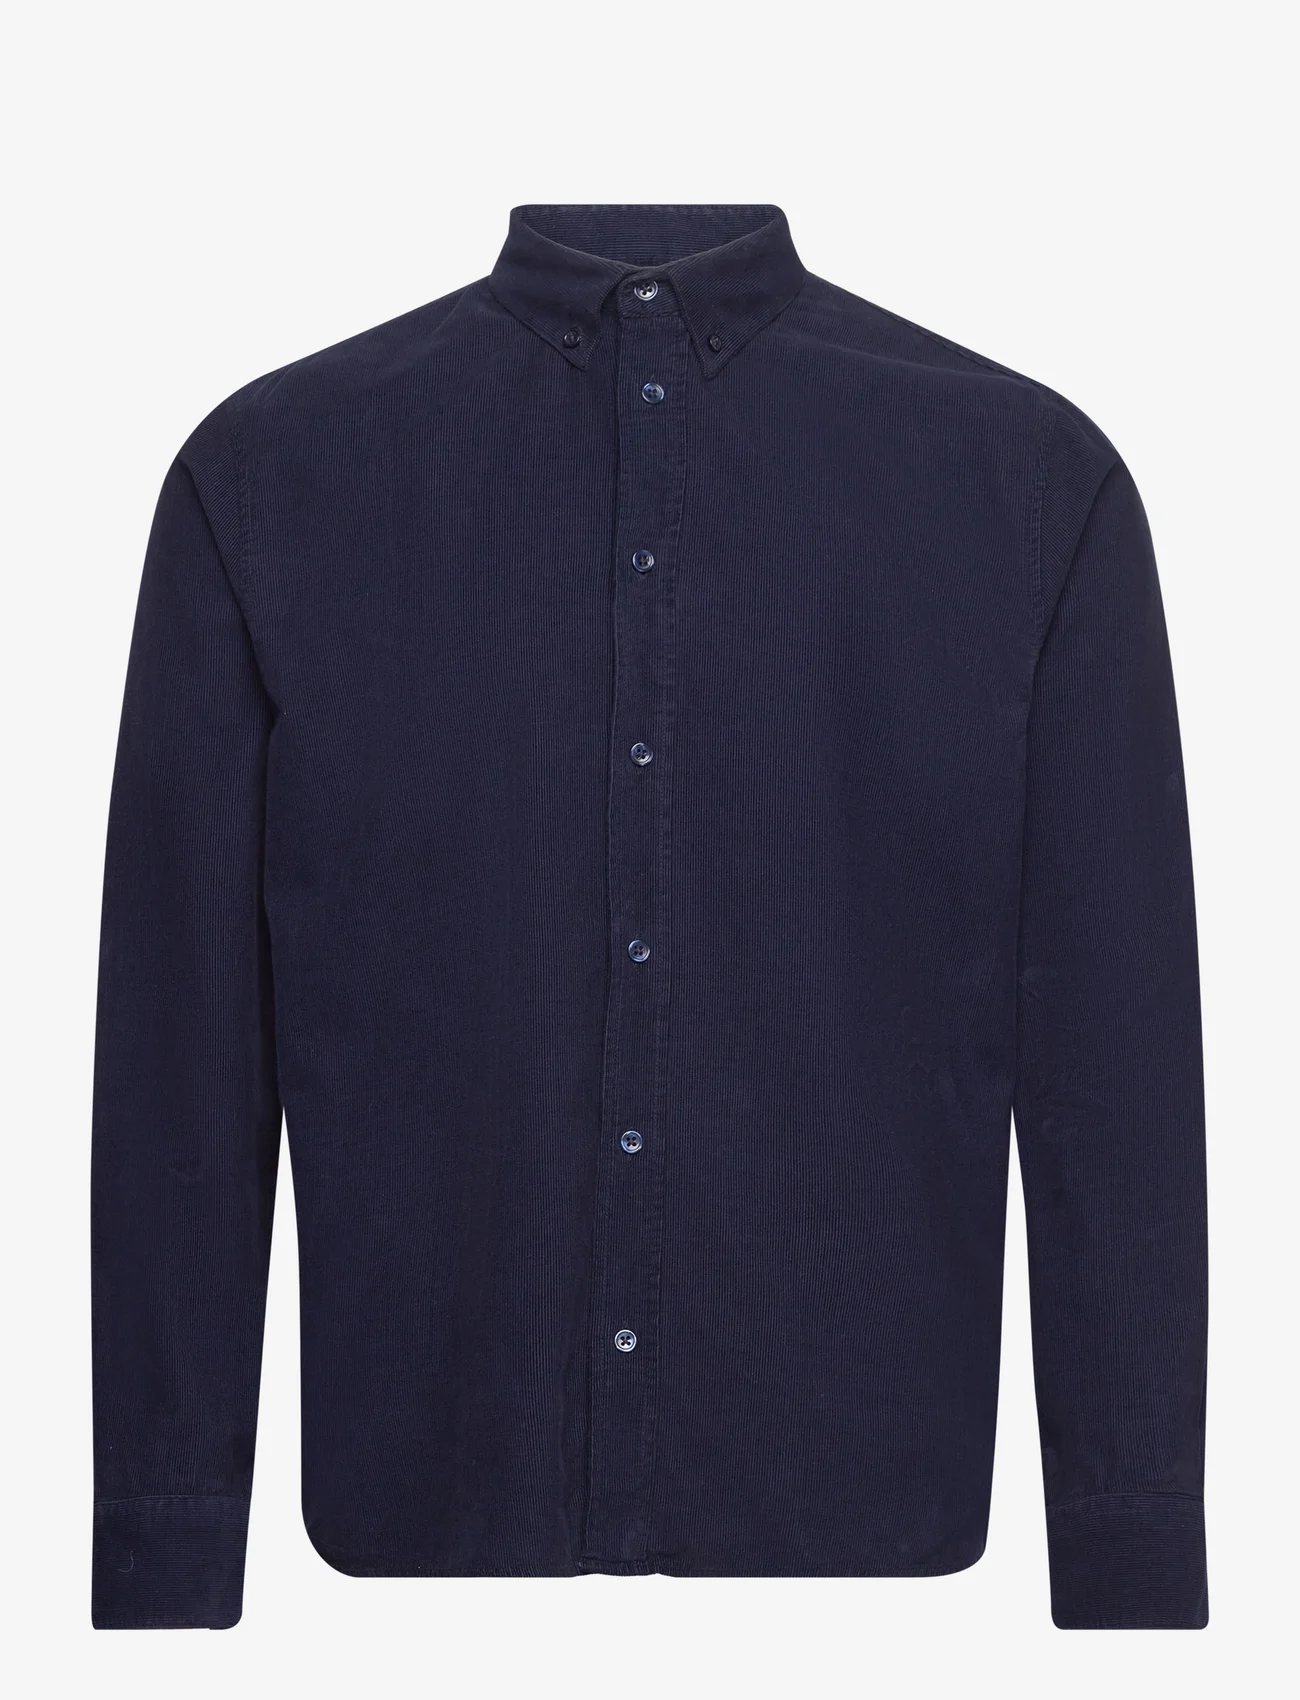 By Garment Makers - Vincent Corduroy Shirt GOTS - velvetiniai marškiniai - 3096 navy blazer - 0